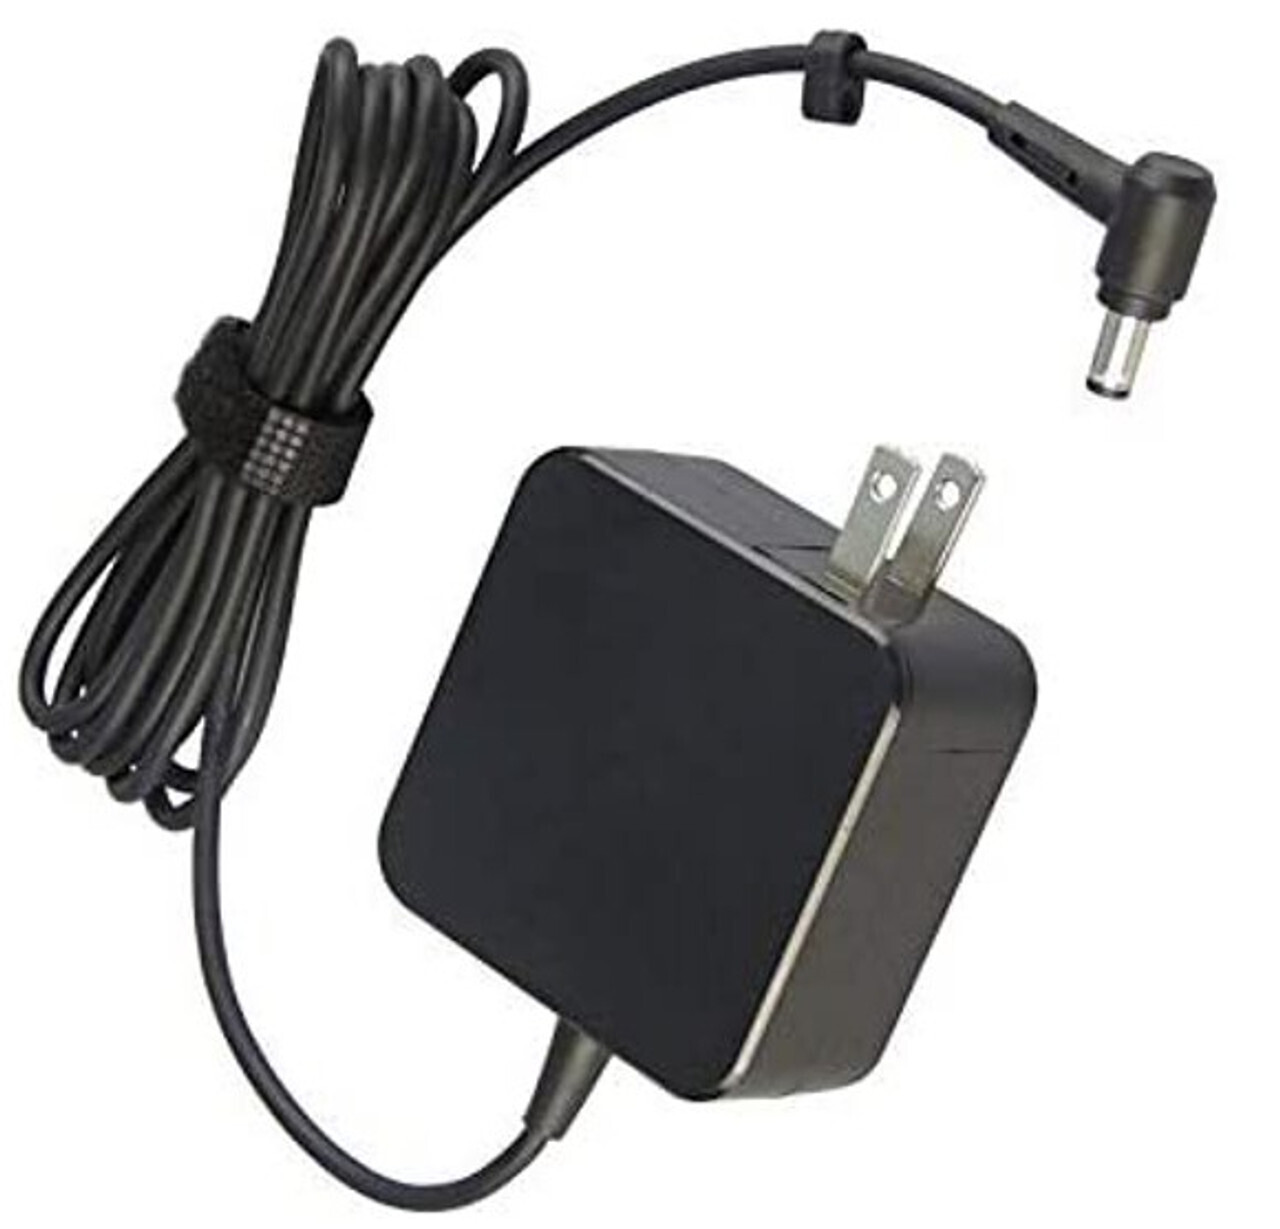 AC Power adapter for Leader companion SC447, SC448 45W 19V 2.37A.